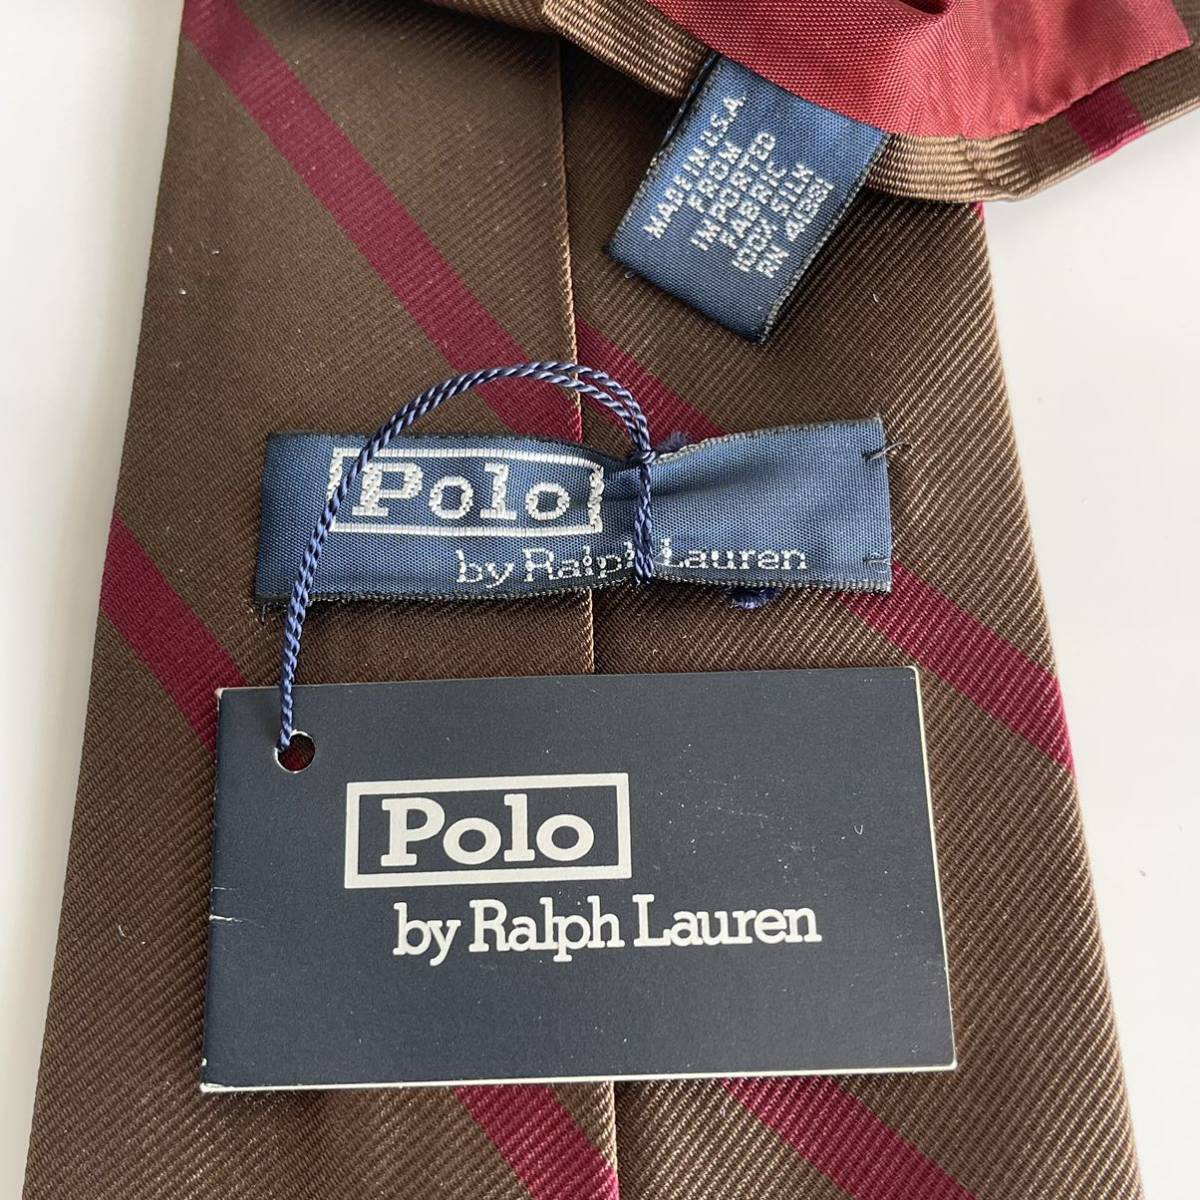 POLO by RALPH LAUREN( Polo bai Ralph Lauren ) Brown red stripe necktie new goods unused tag attaching 